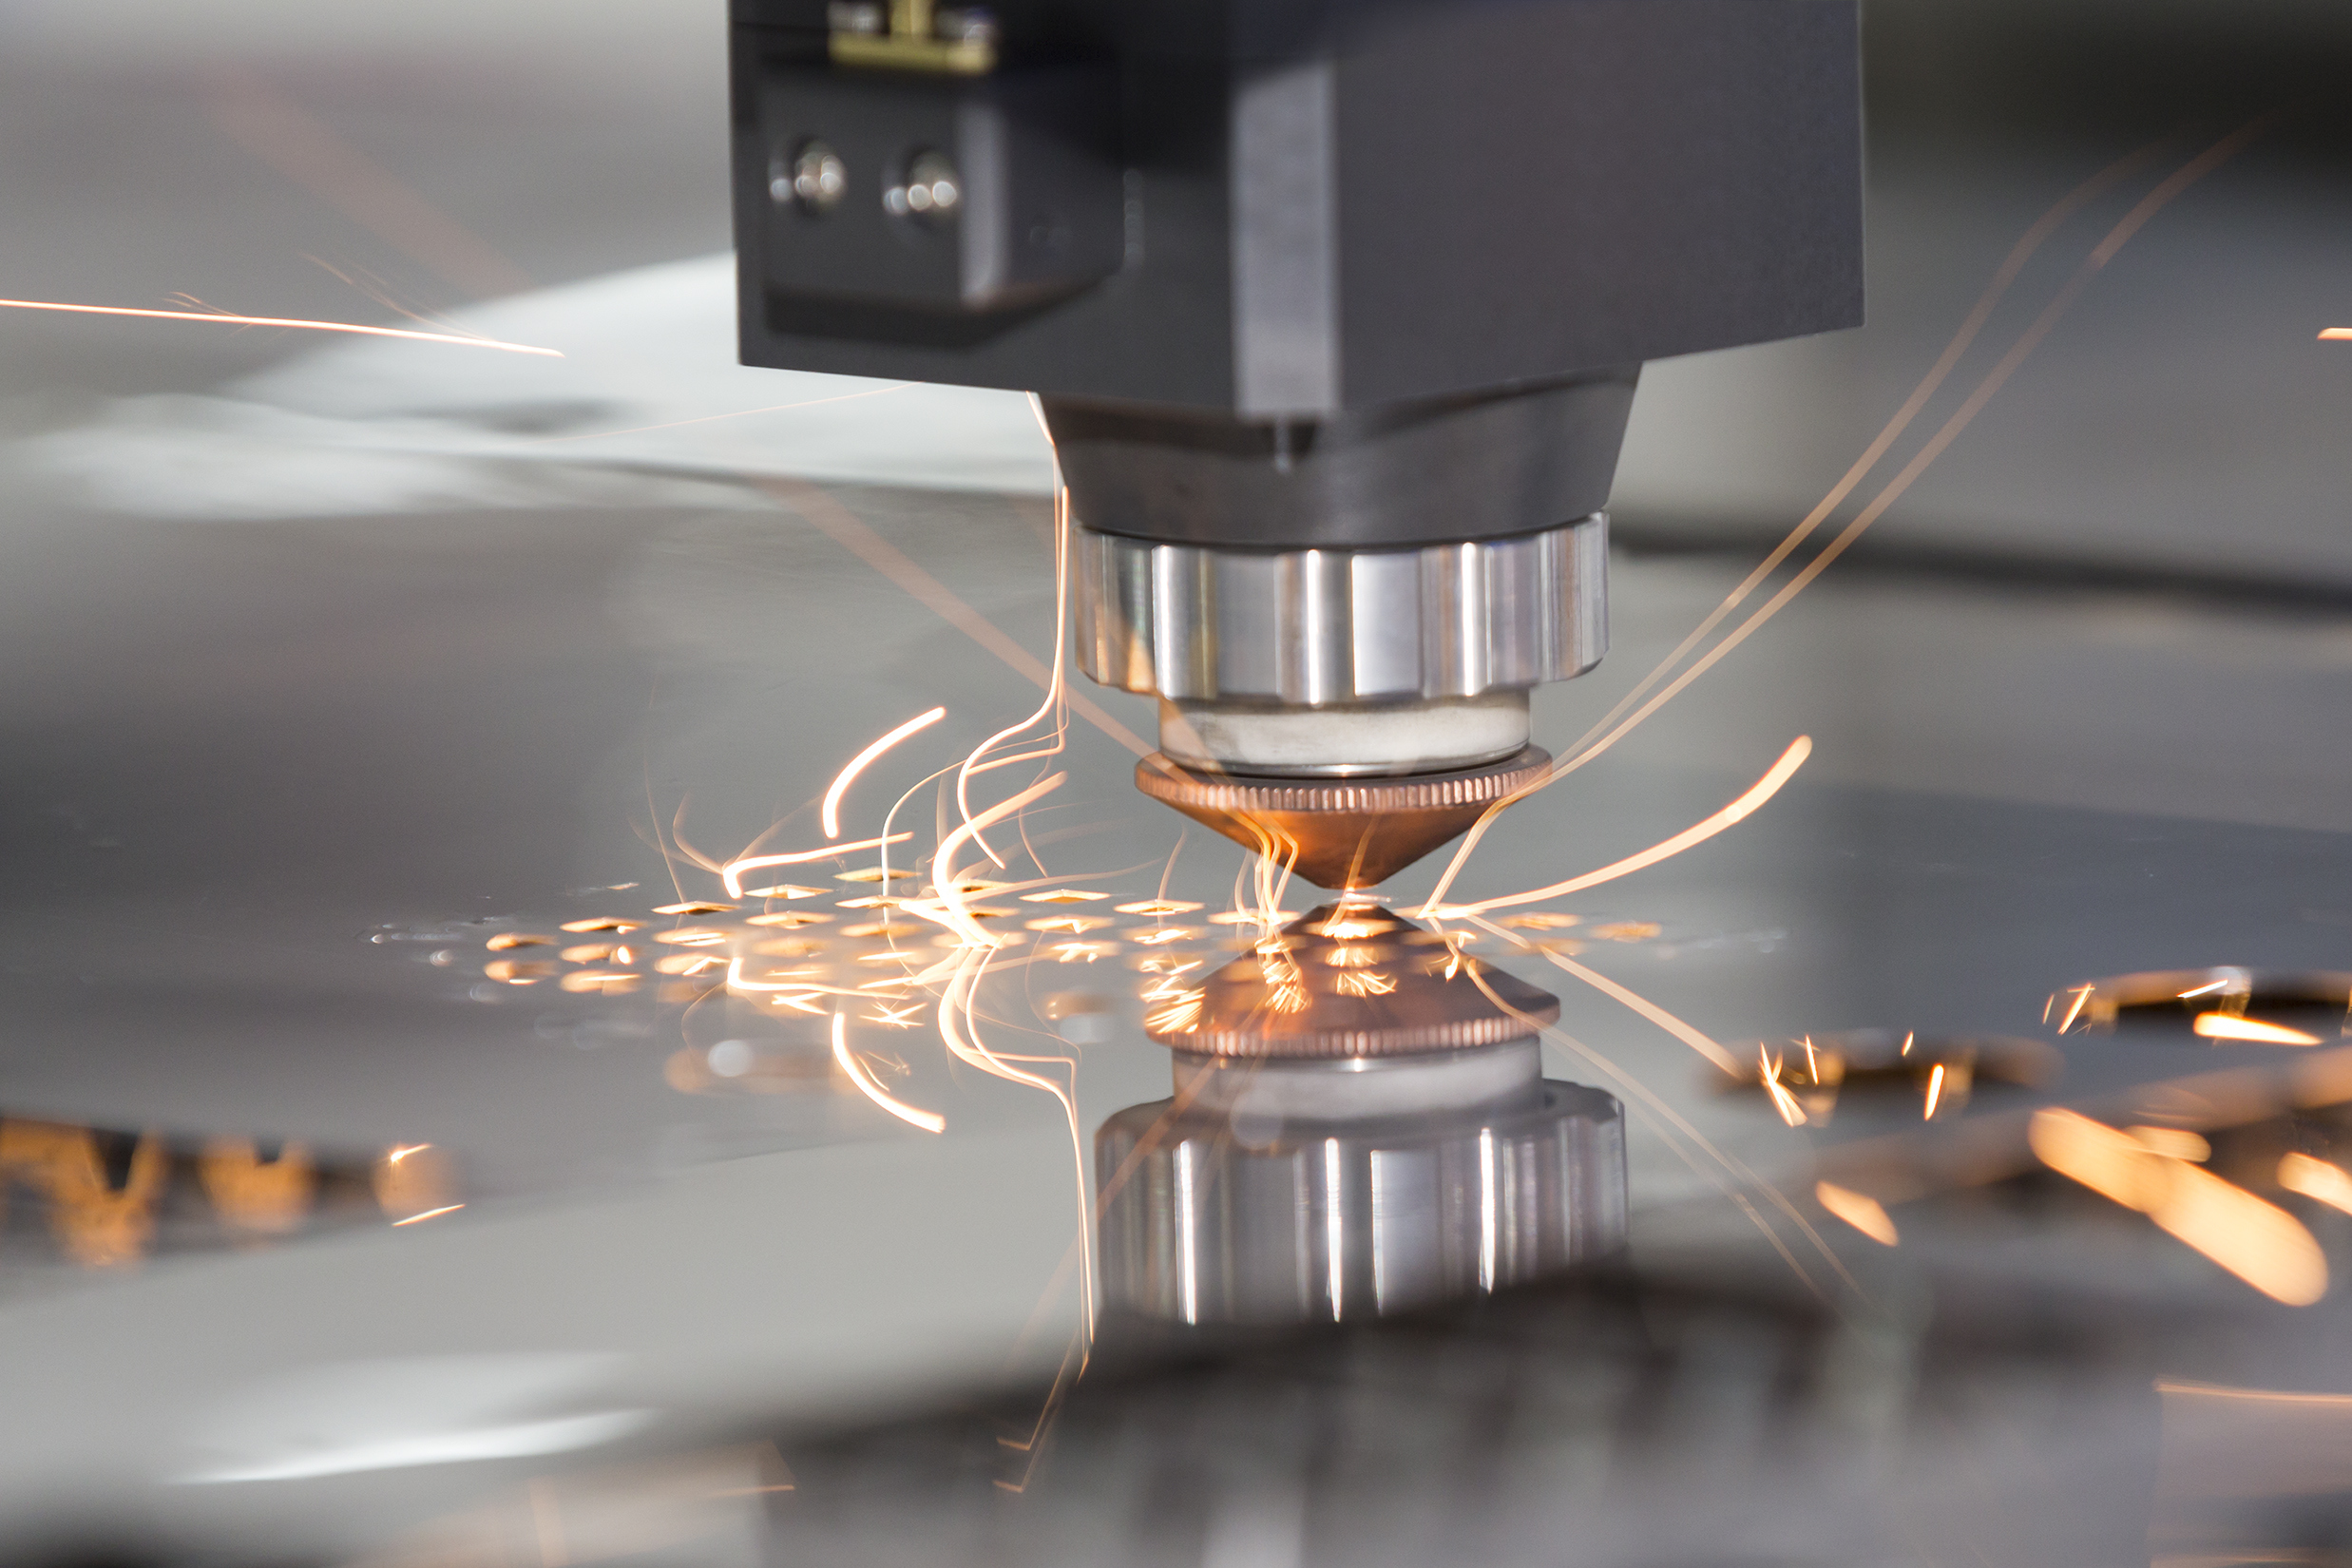 Metal Pipe Laser Cutting Equipment